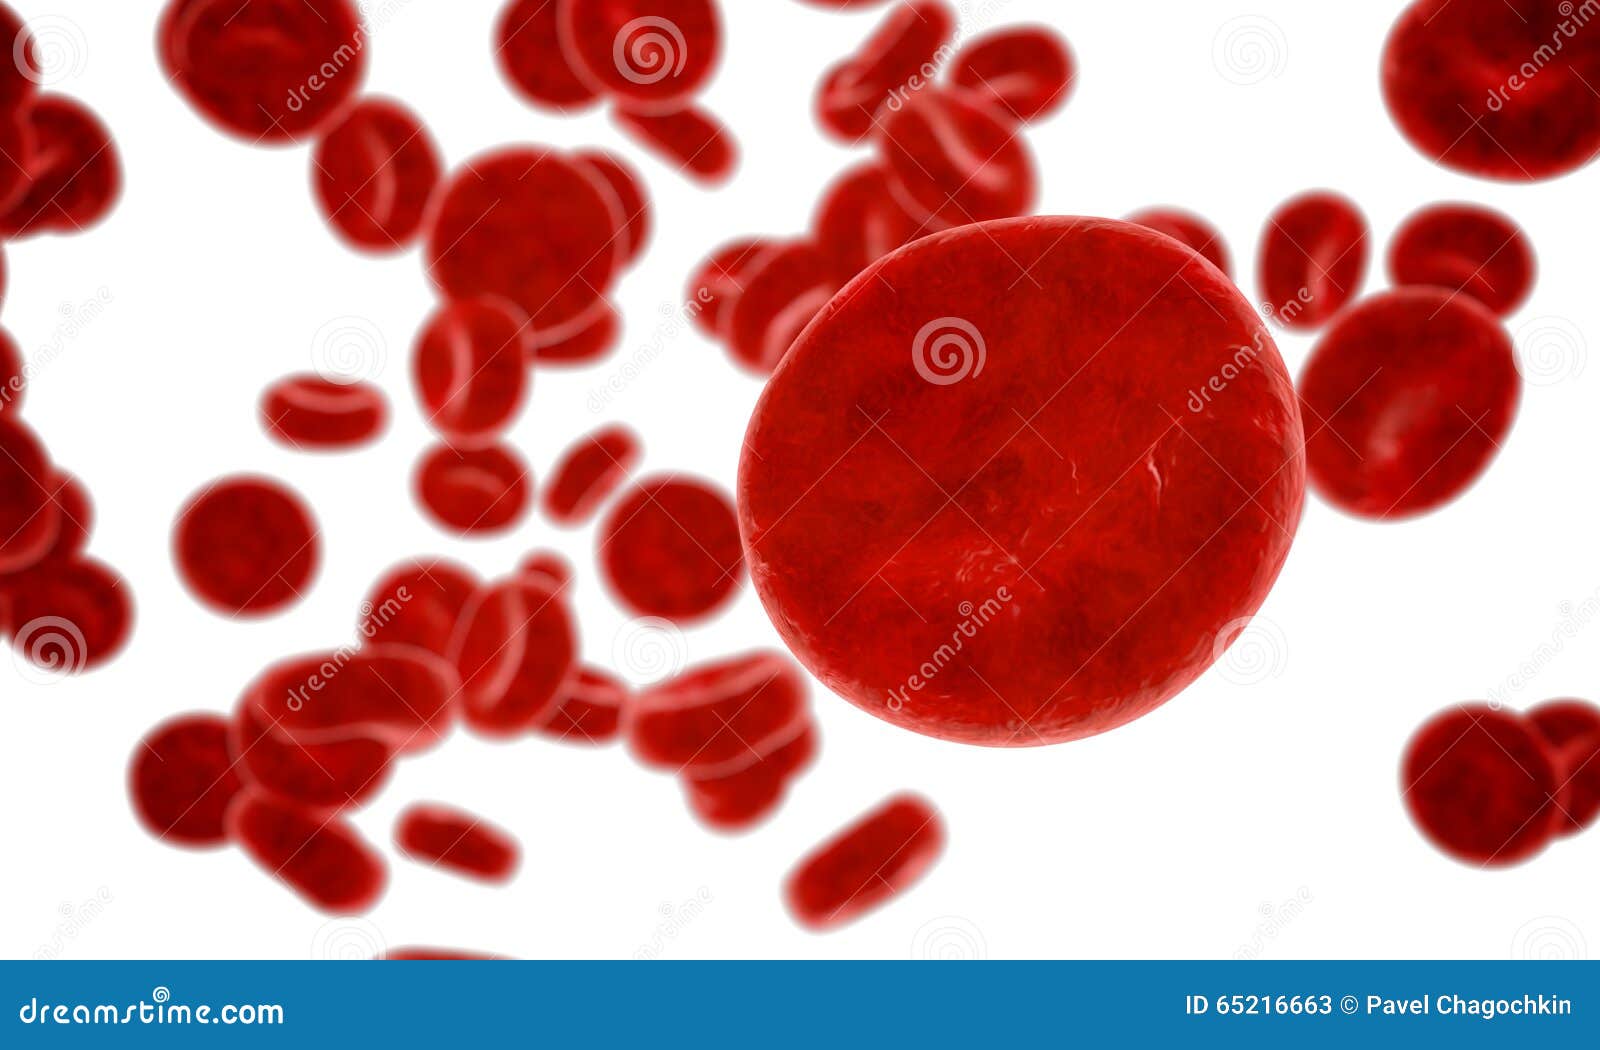 erythrocyte, red blood cells, anatomy concept